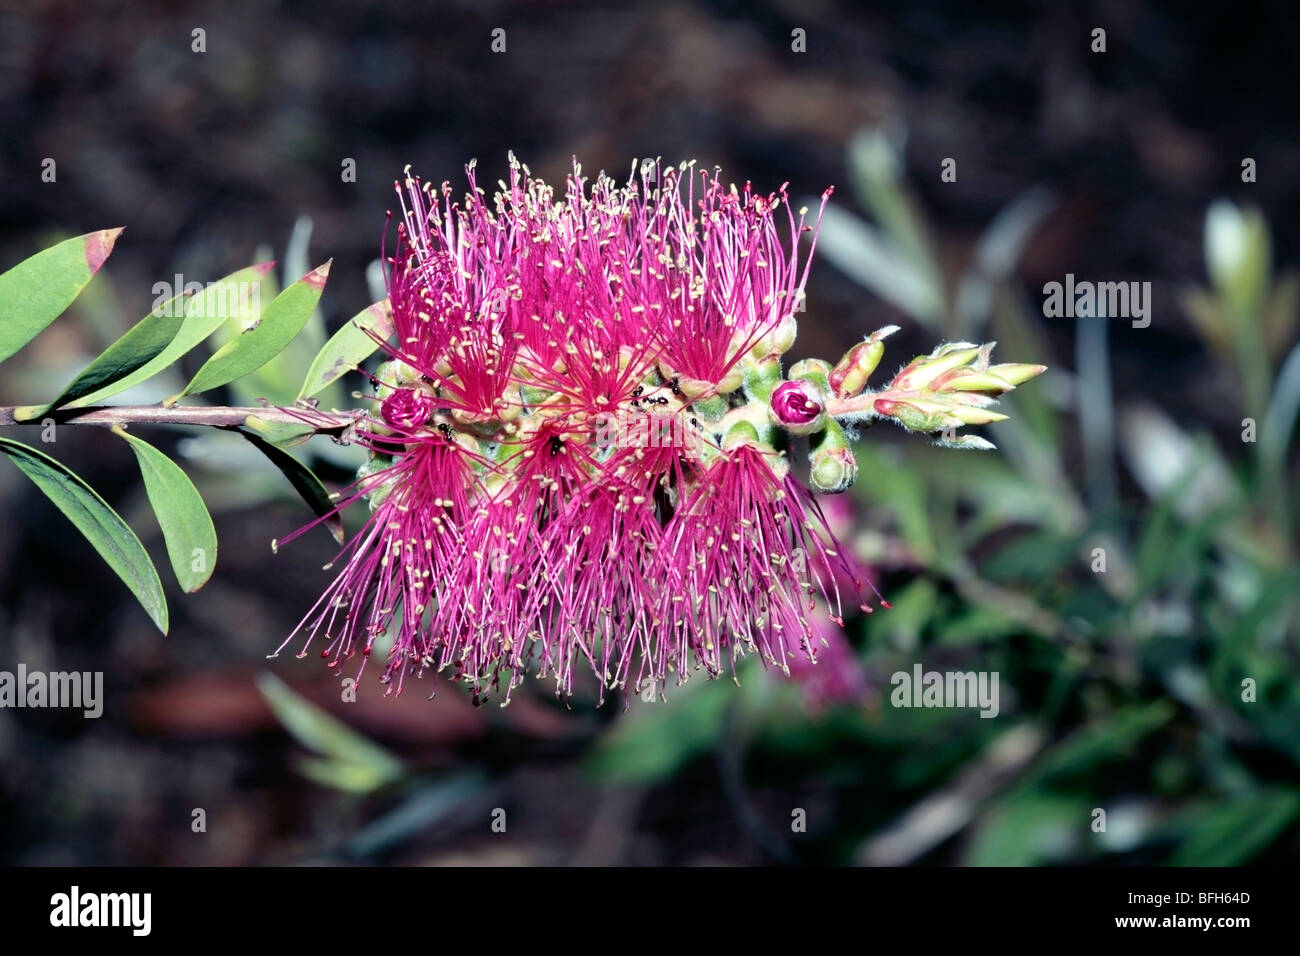 Bottlebrush/Melaleuca flower spike and Black Ants [lasius niger]- Family Myrtaceae Stock Photo